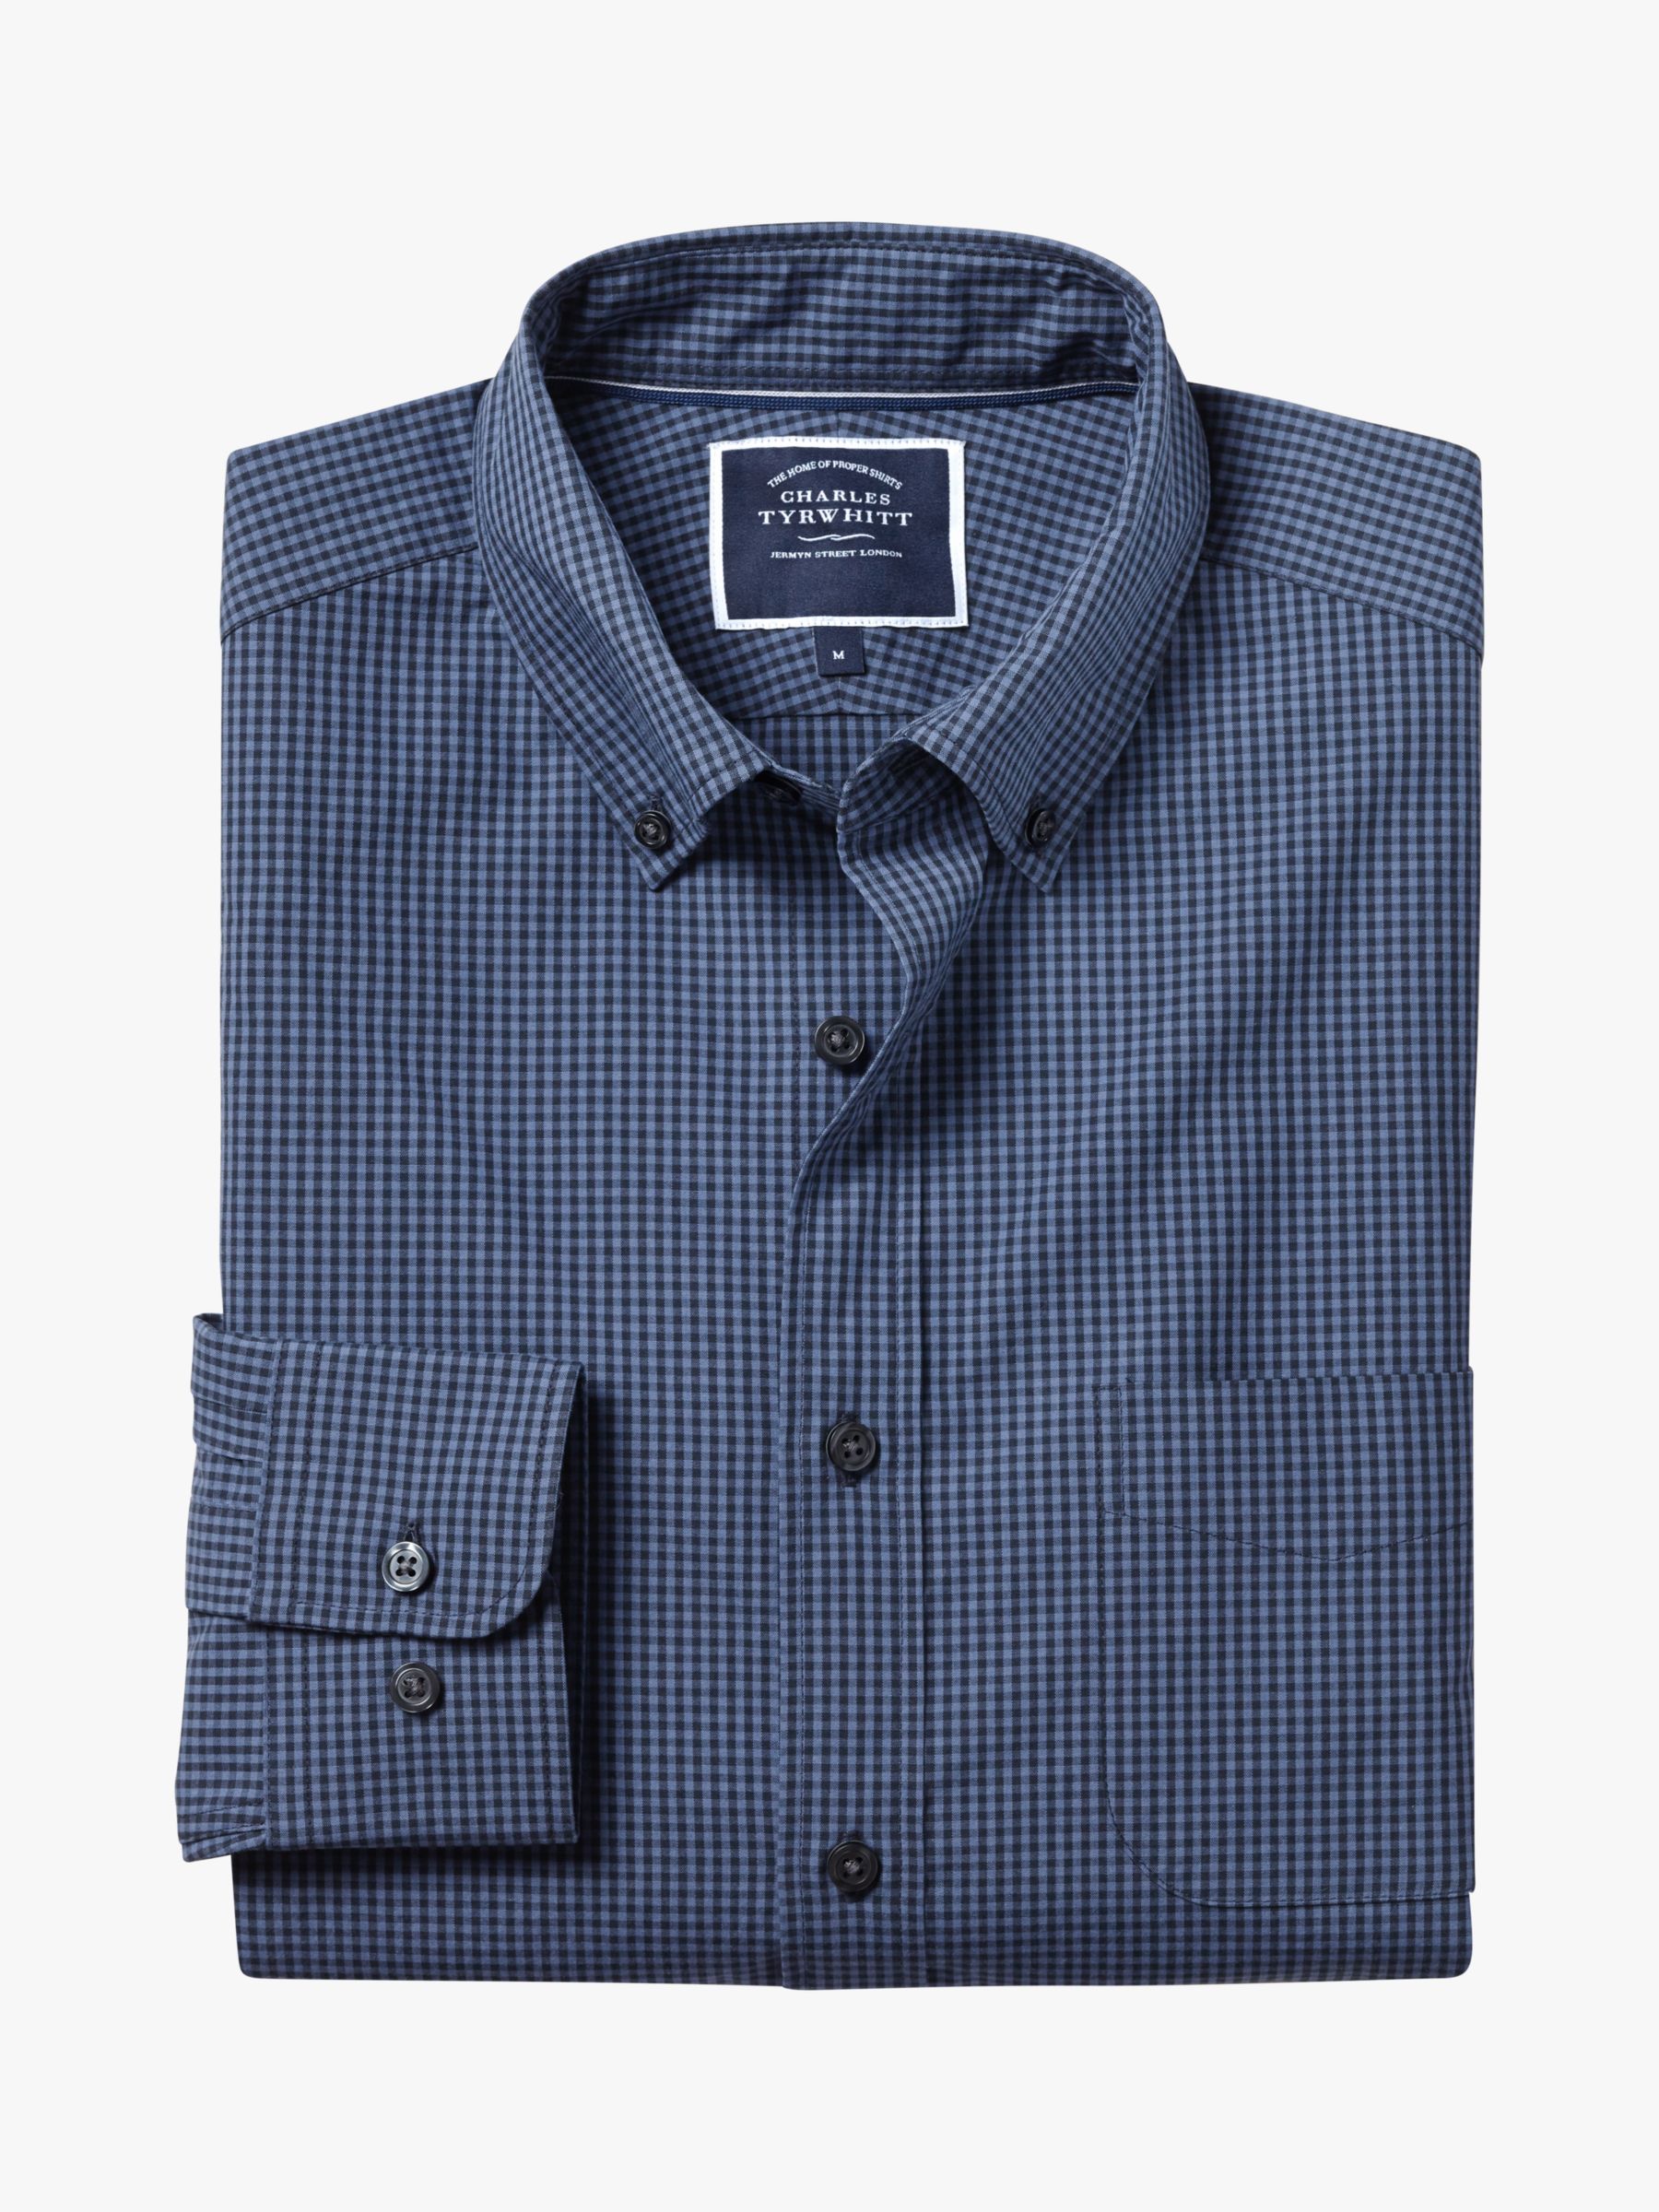 Charles Tyrwhitt Poplin Weave Check Shirt, Indigo Blue, S